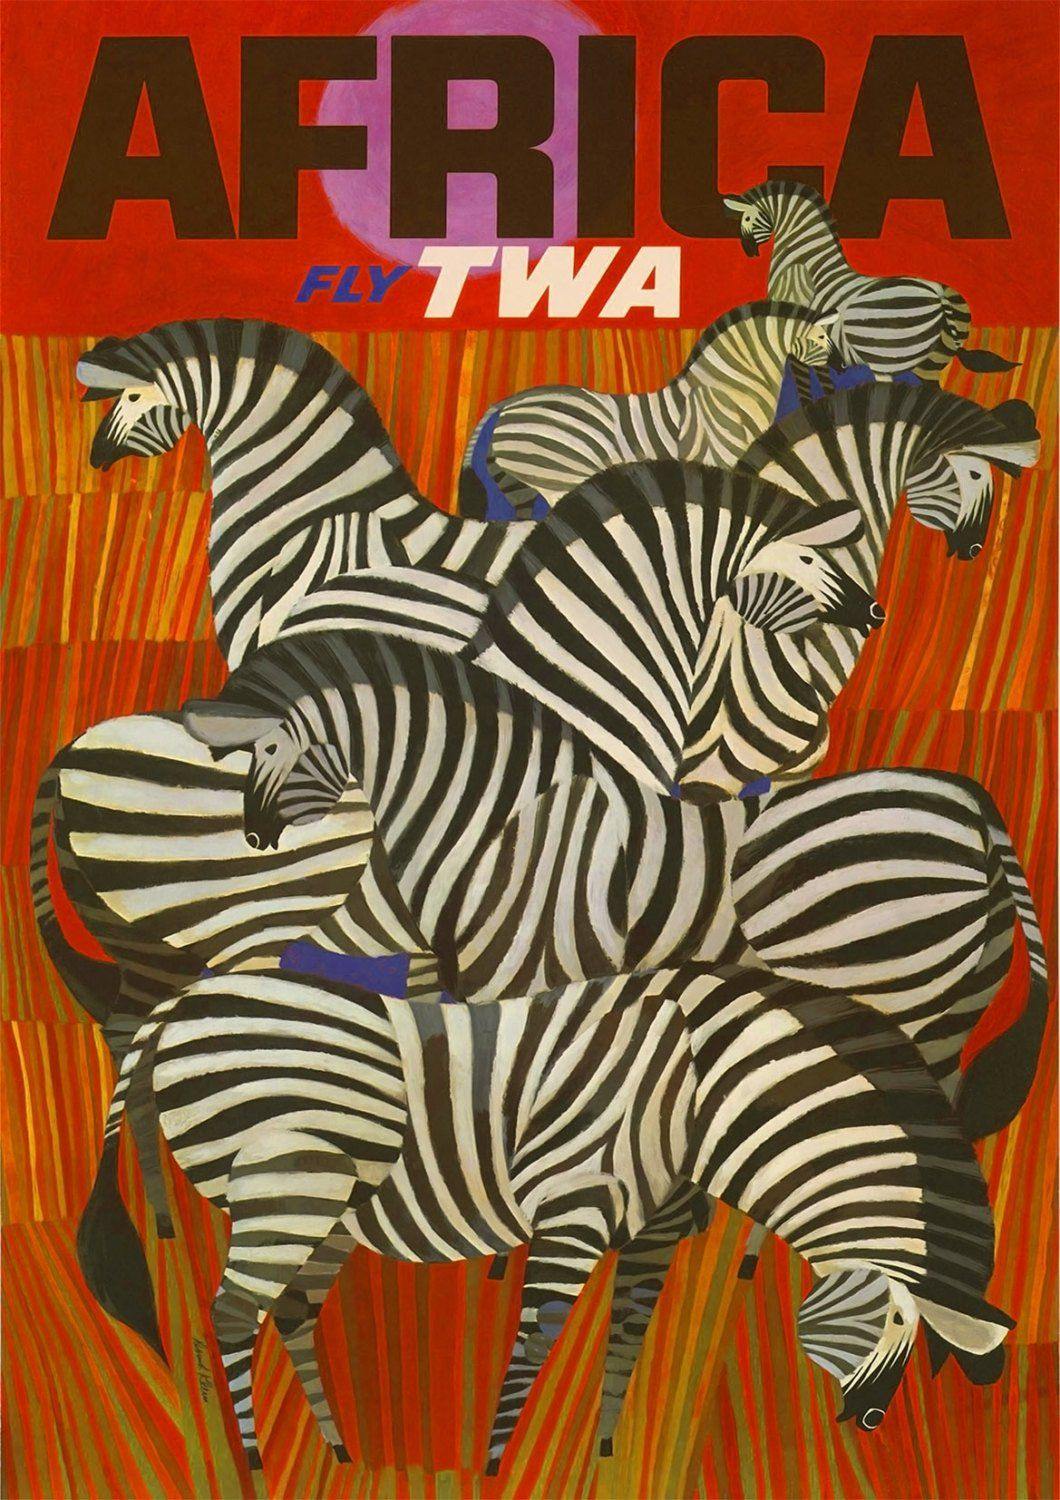 AFRICA ZEBRA POSTER: Vintage Travel Advert Art Print - Pimlico Prints